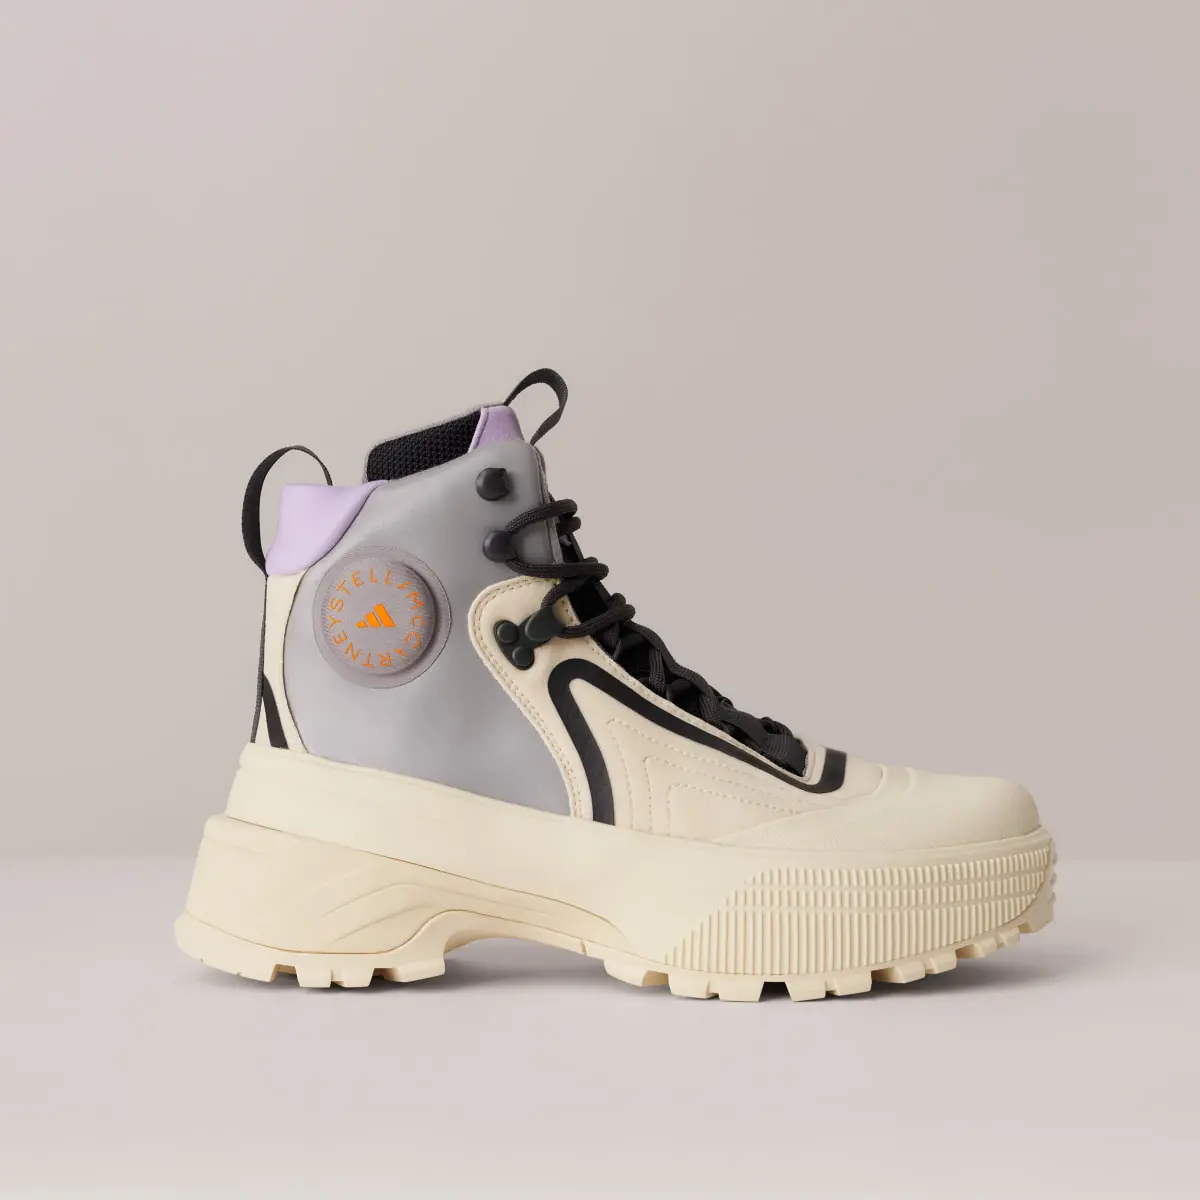 Adidas Chaussure de randonnée adidas by Stella McCartney x Terrex. 3